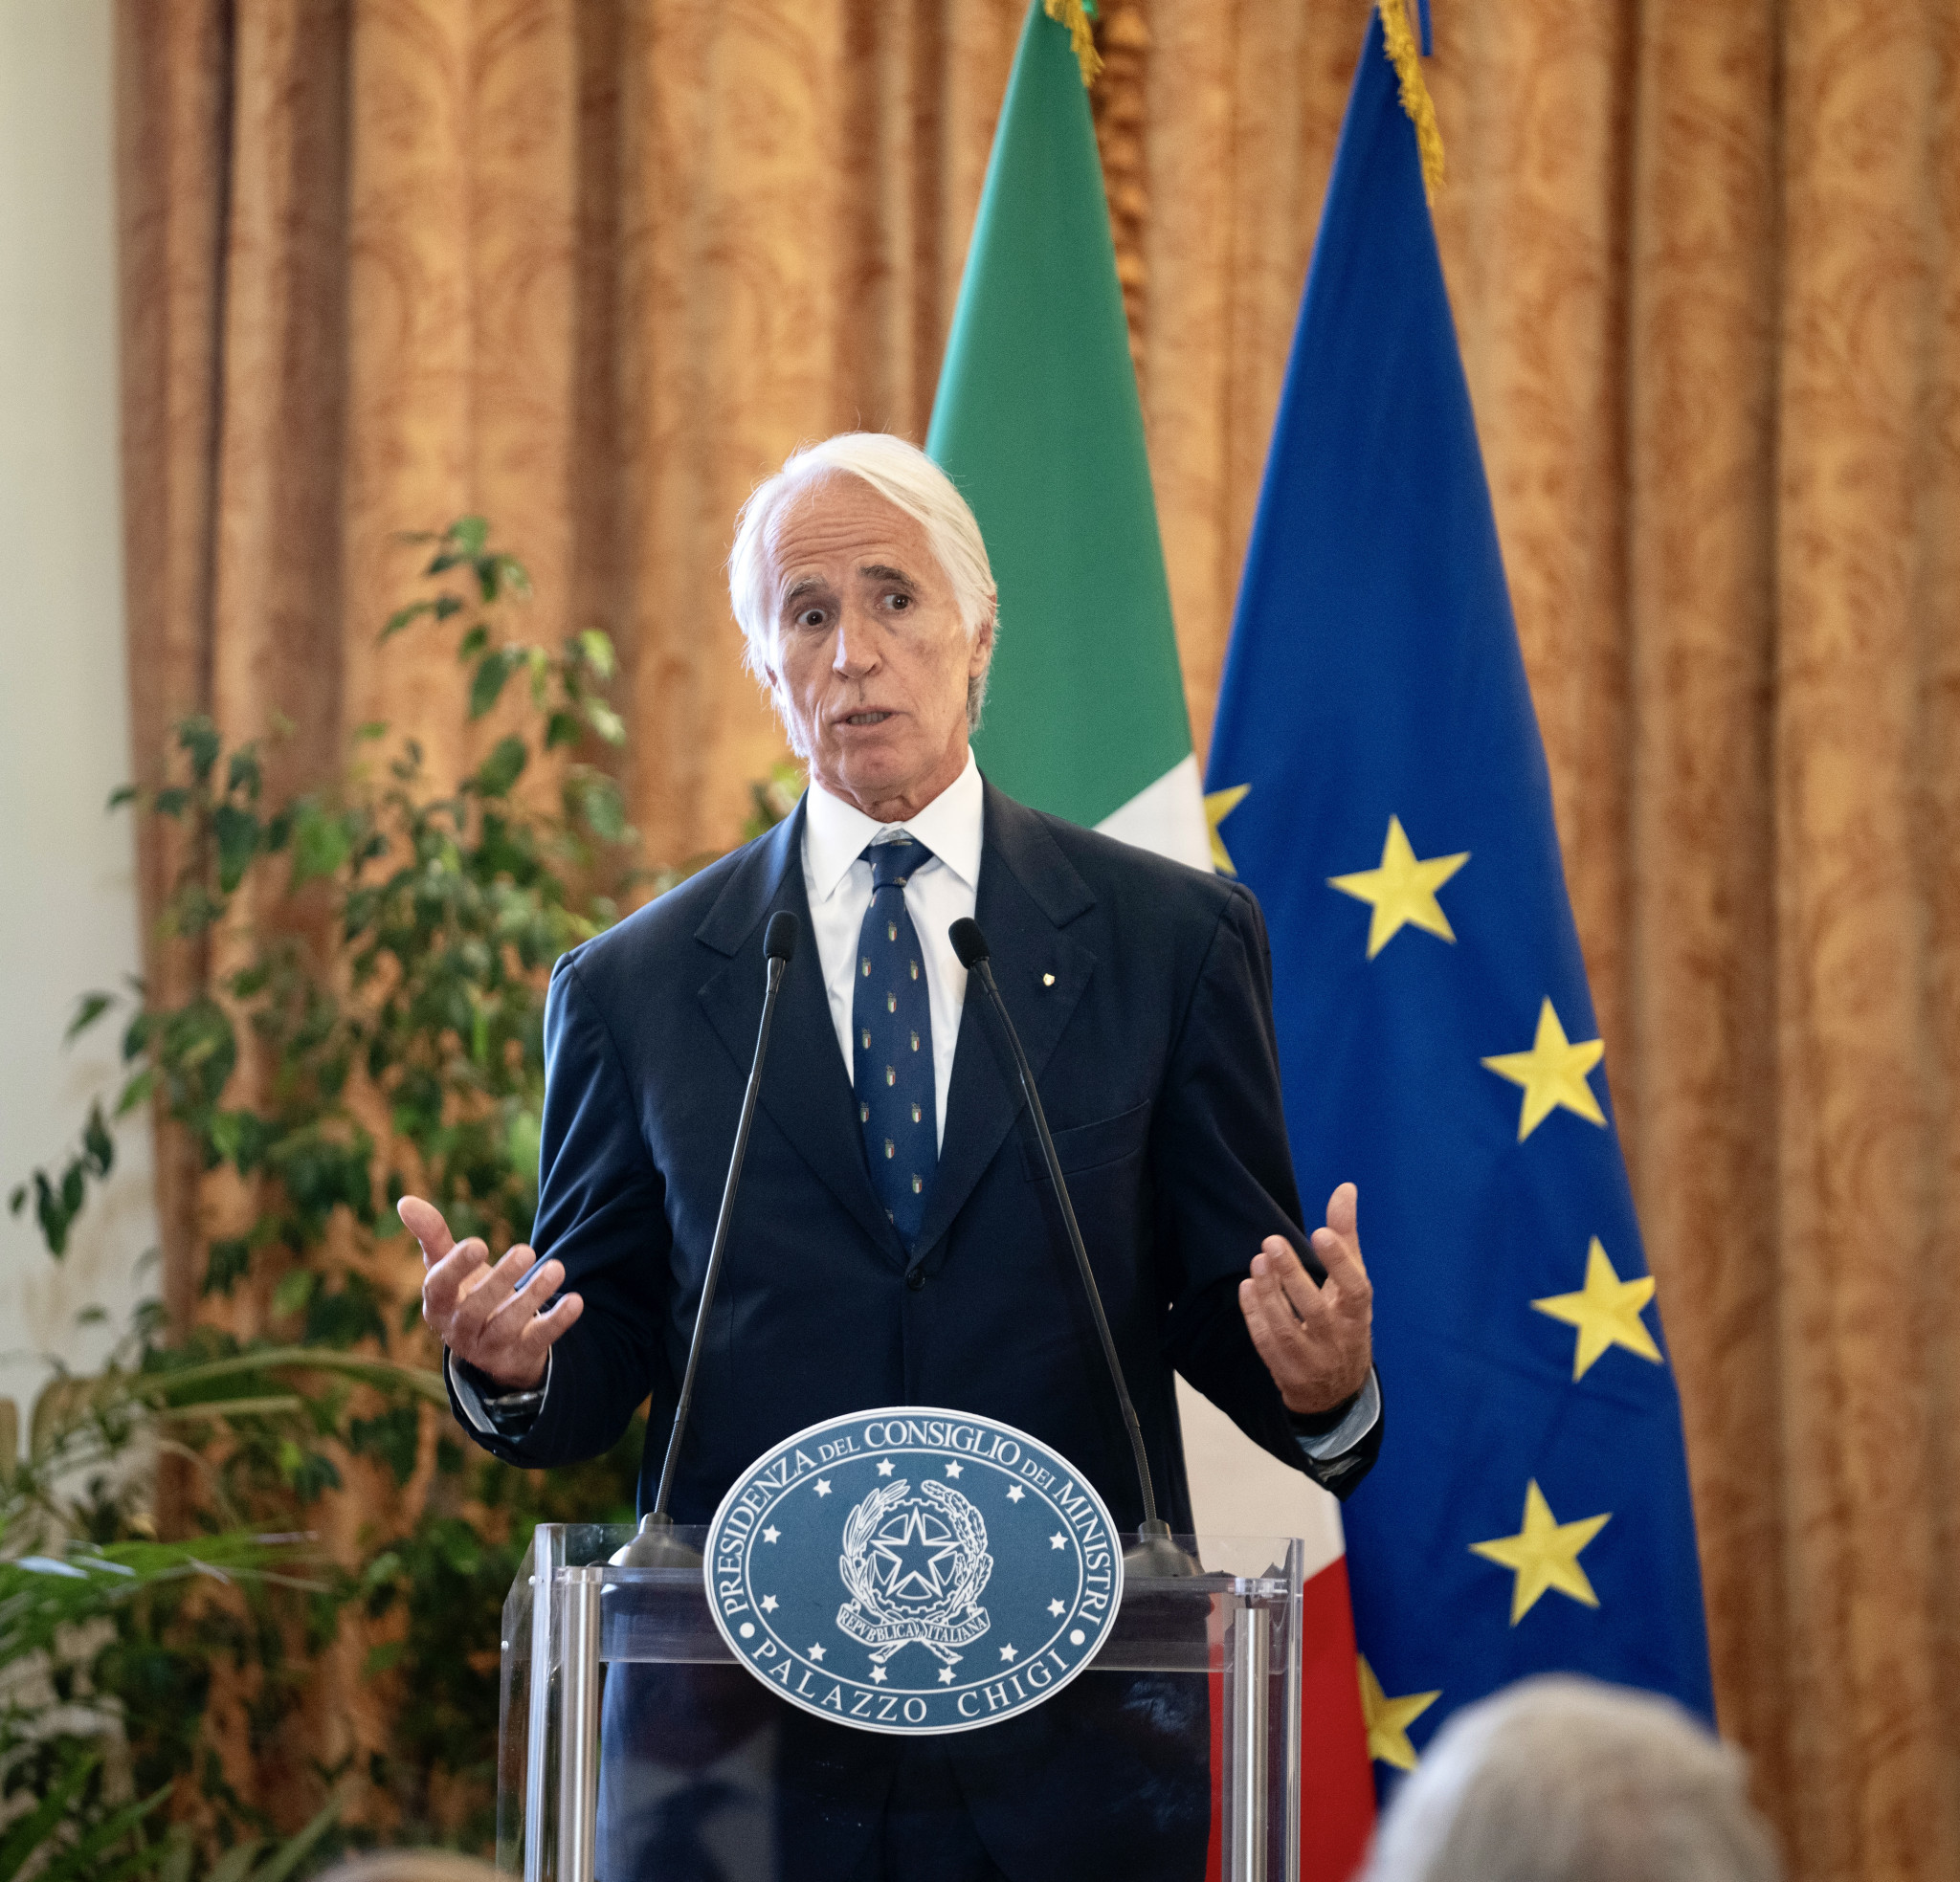 Giovanni Malagò expressed his thanks to the Italian Government for its support towards Milan Cortina 2026 preparations ©Milan Cortina 2026/Filippo Attili